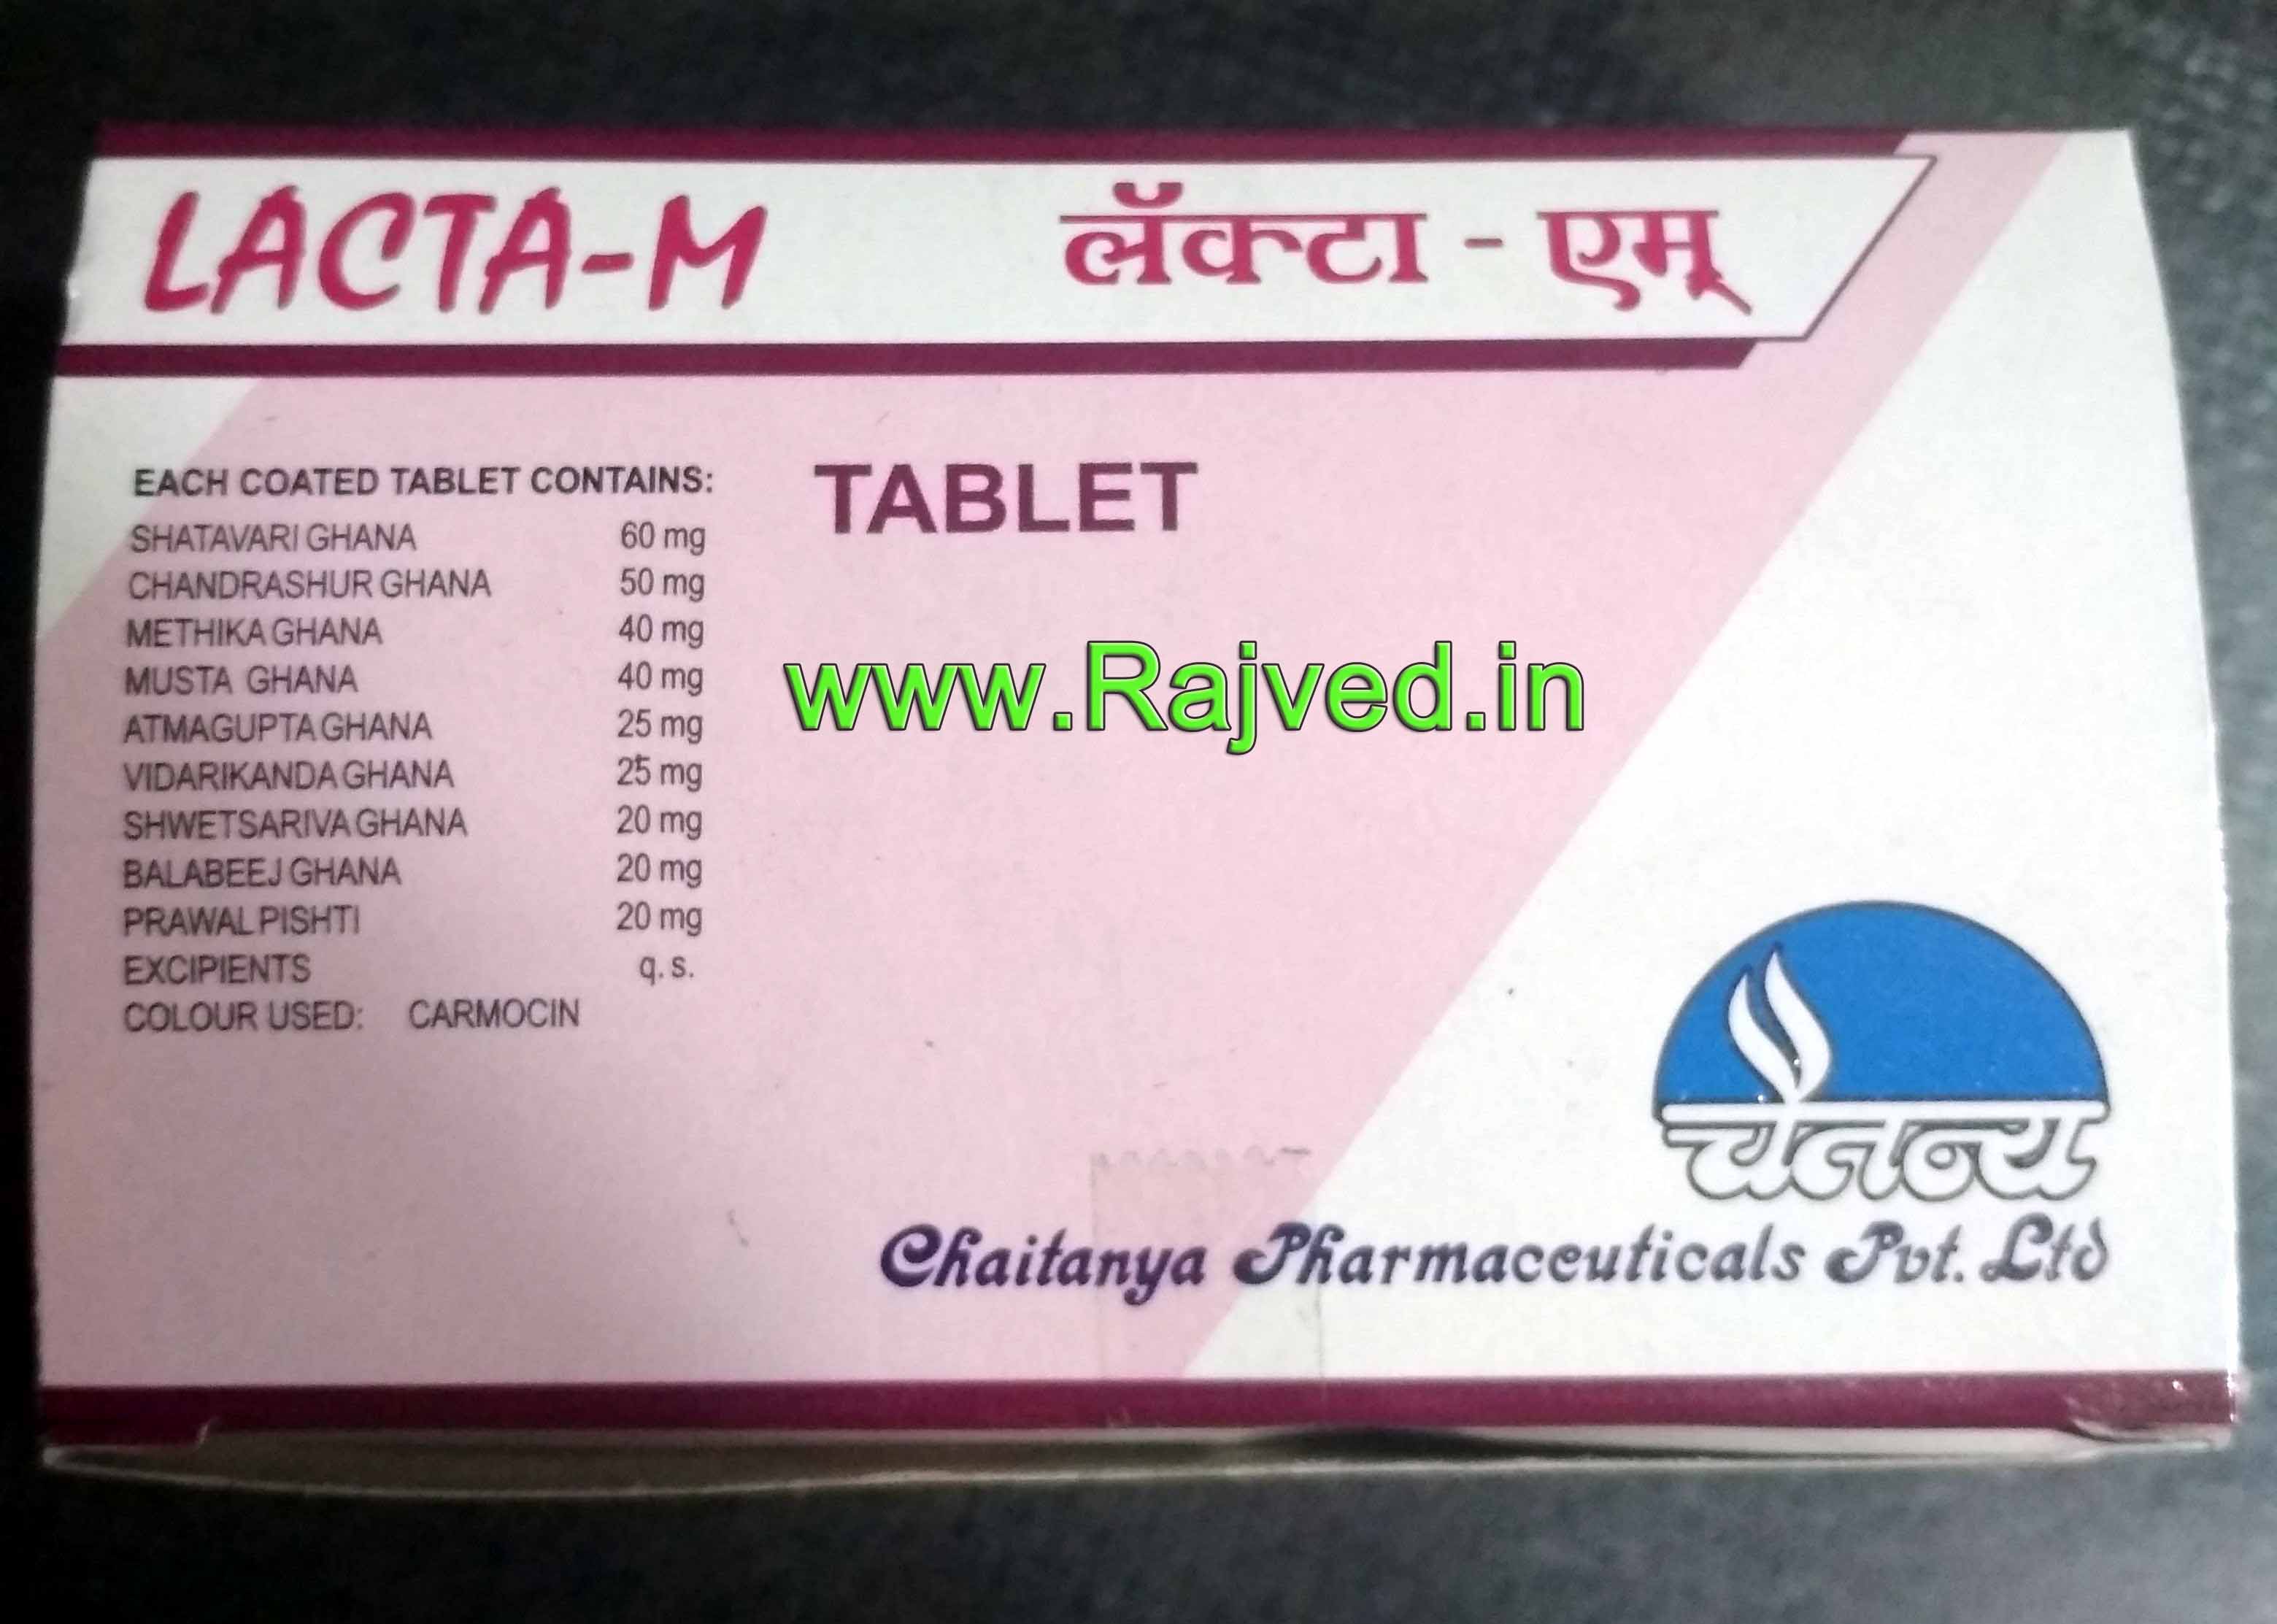 lacta M lactokalp 2000tab upto 20% off free shipping chaitanya pharmaceuticals